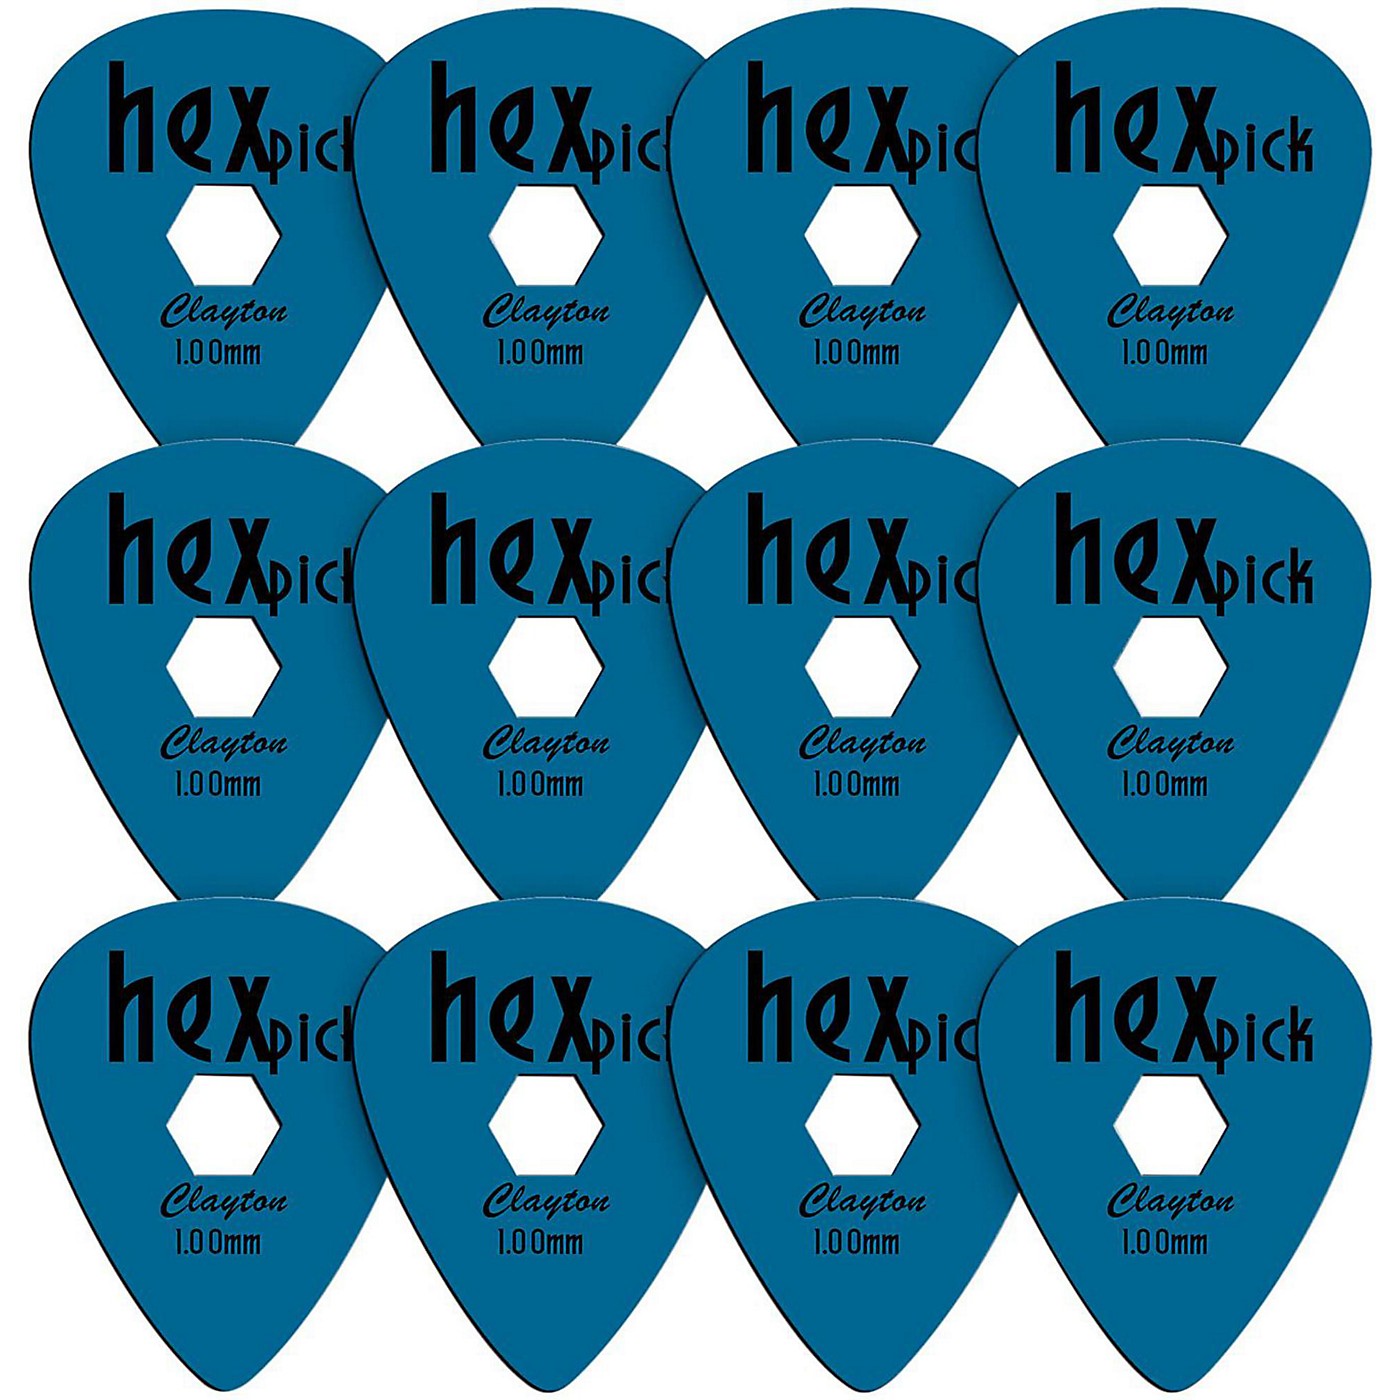 Clayton HexPick Guitar Picks - 12-Pack thumbnail